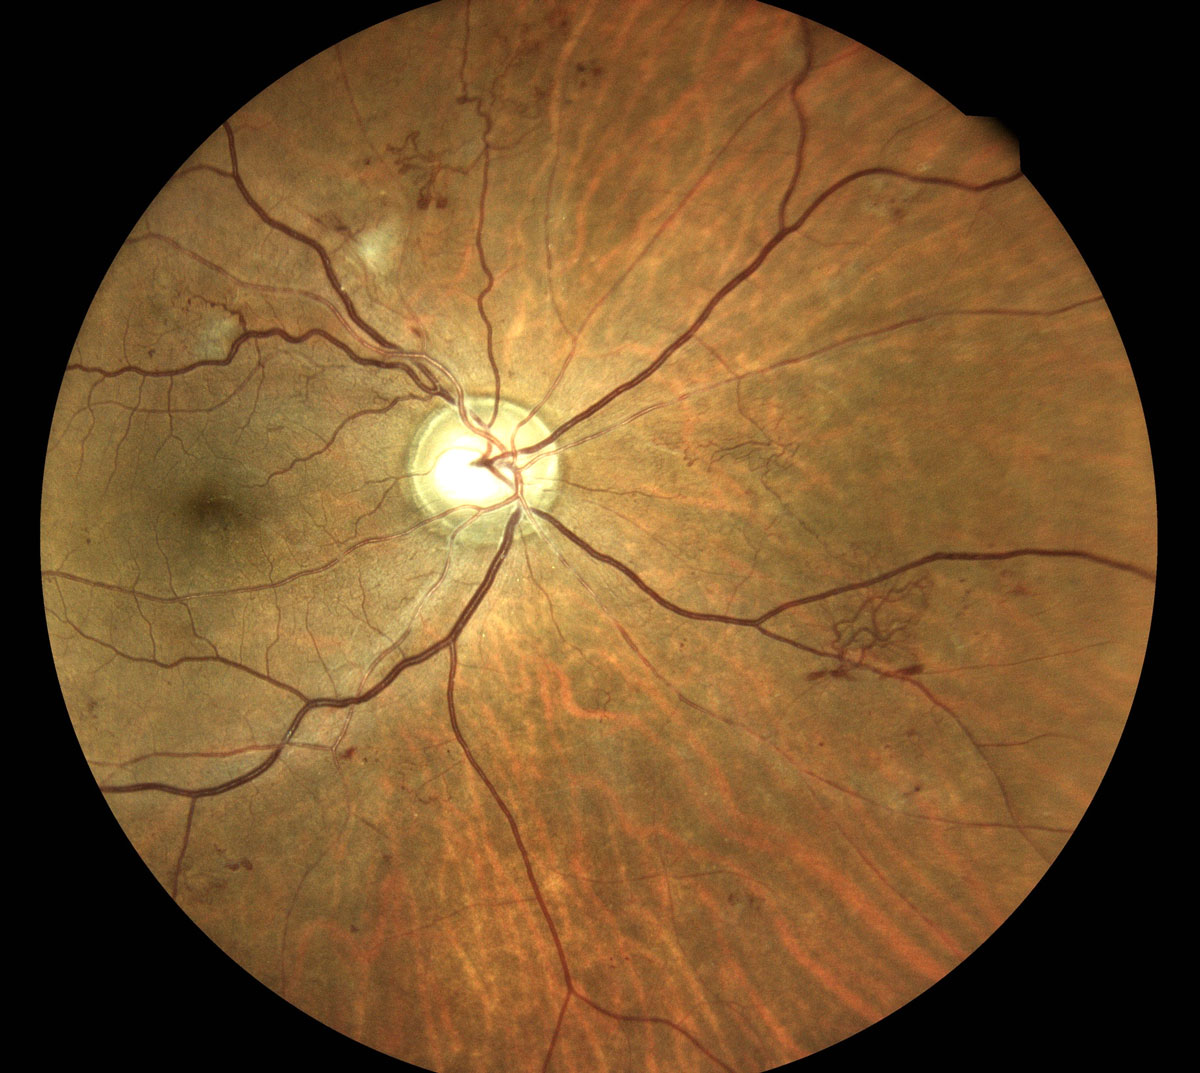 Figure 3. Proliferative diabetic retinopathy with neovascularization. Image courtesy of Steven Ferrucci, OD